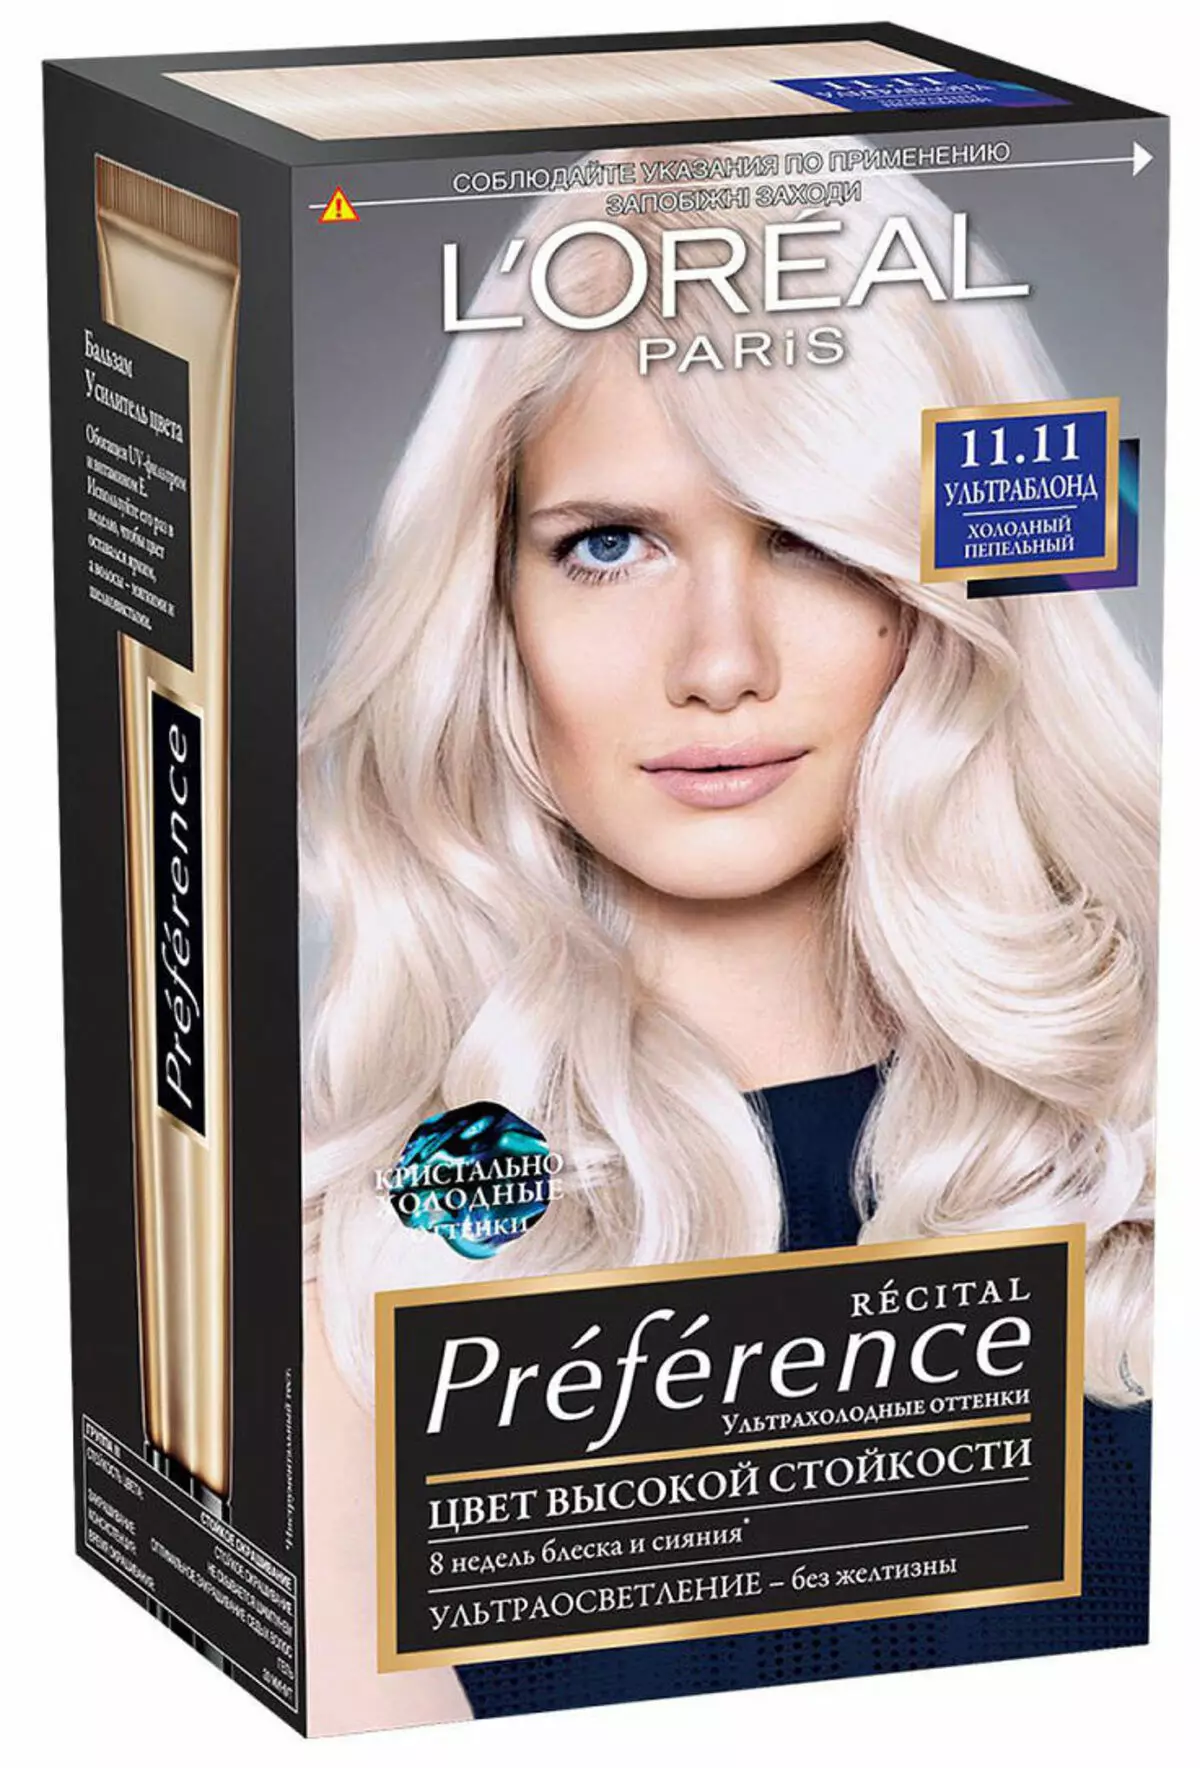 Pintura de cabelo L'Oreal Paris (60 fotos): a paleta de cores e tons de tinta profissional, características da série Colorista e profissional, prodígio e outros, Reviews 5414_5